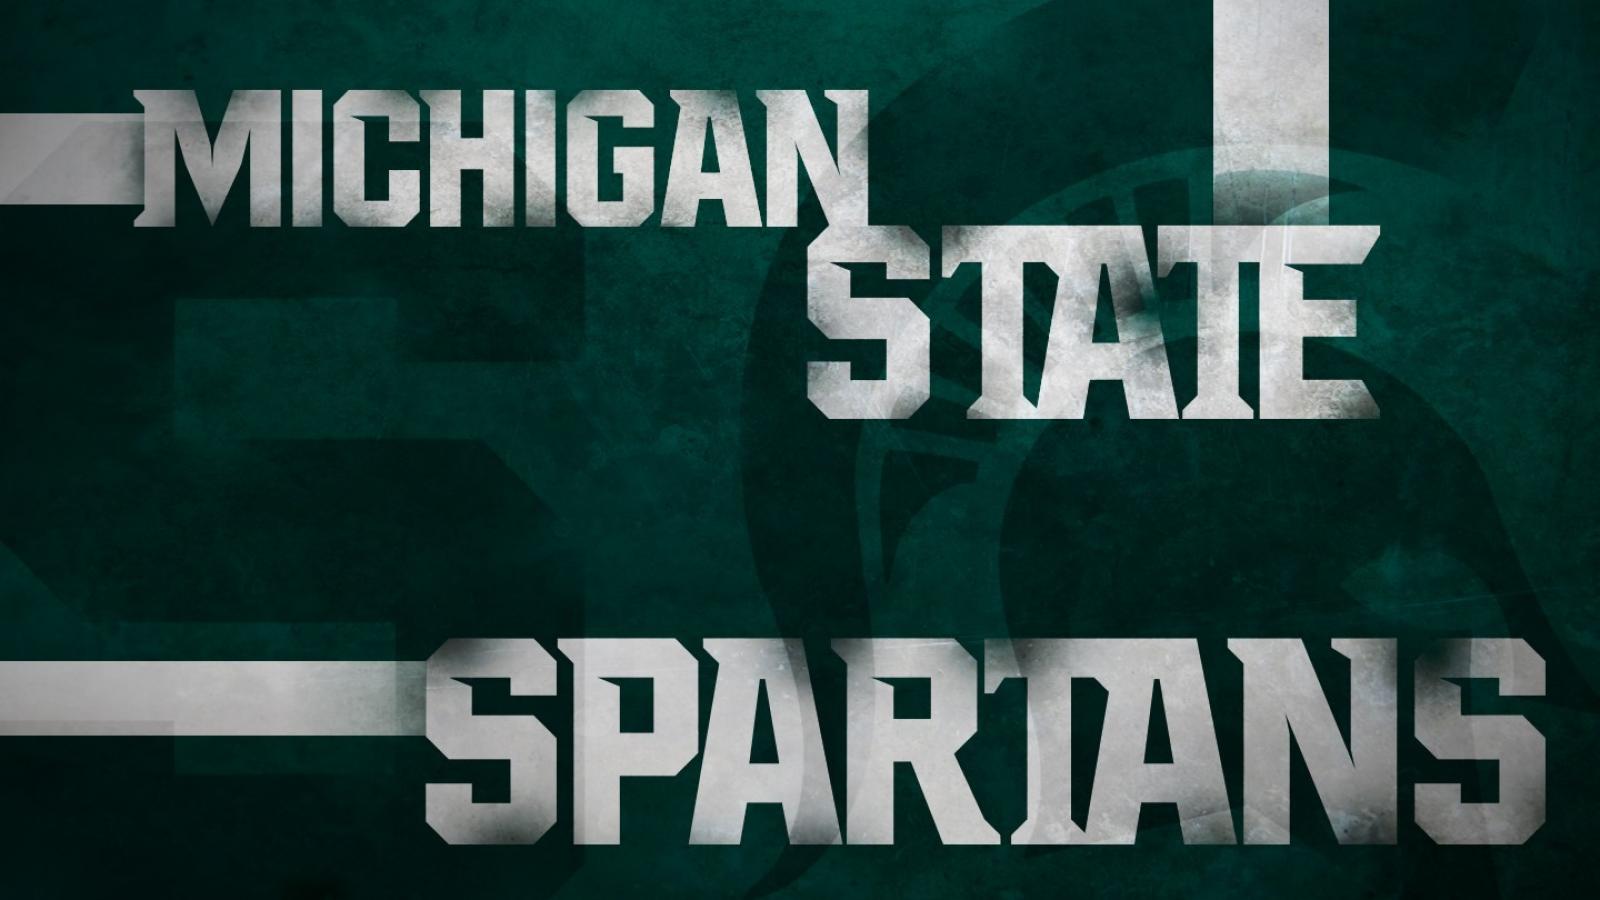 Michigan state spartans wallpaper 62795